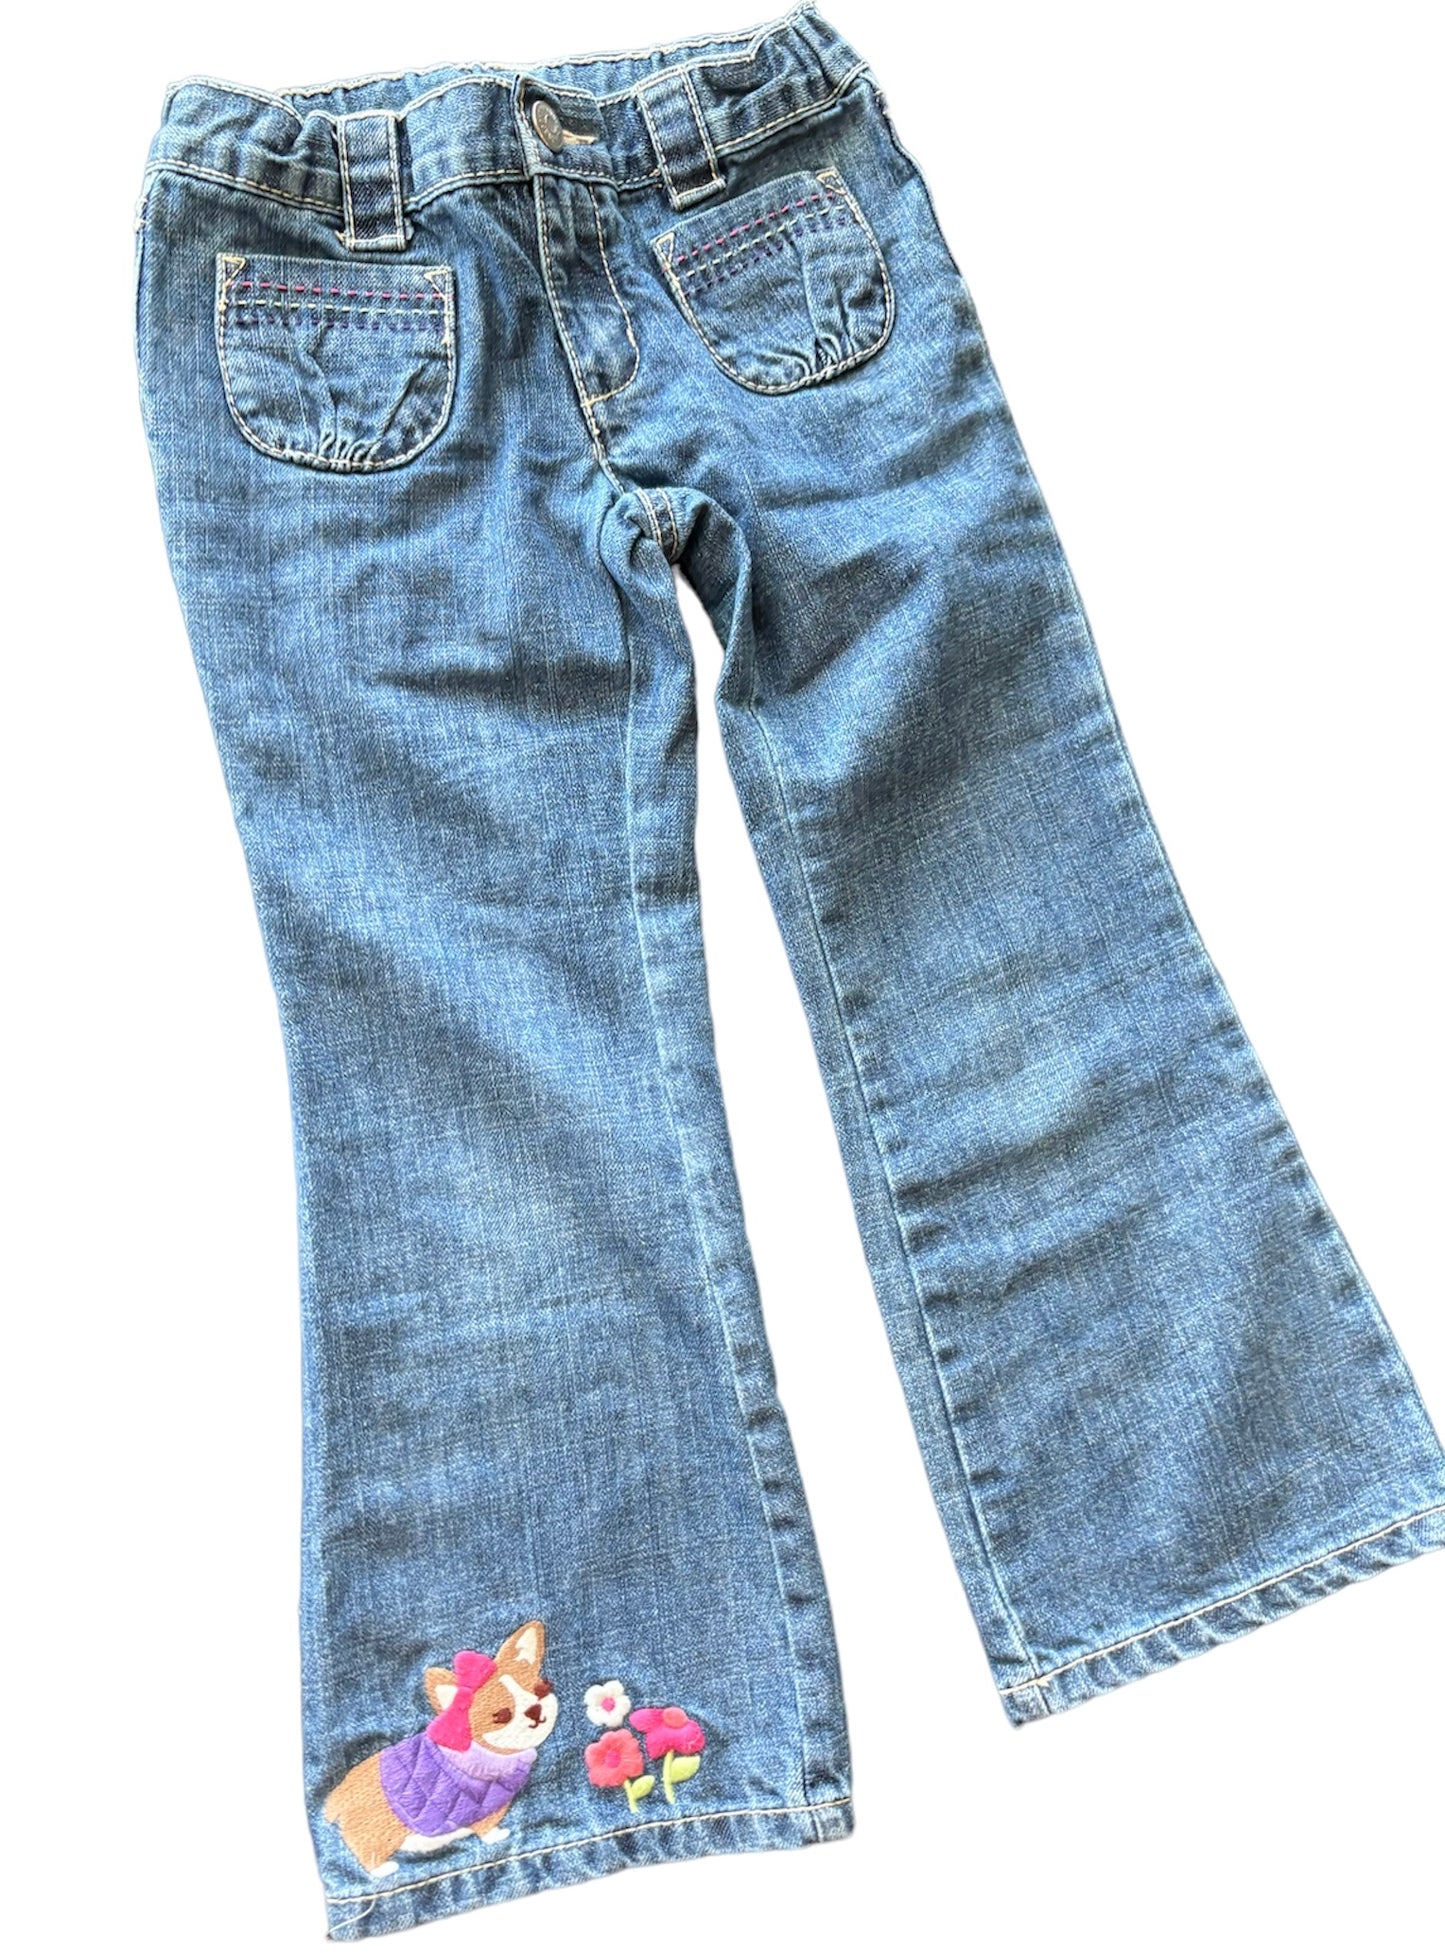 Size 5T Gymboree Stylish Corgi Jeans